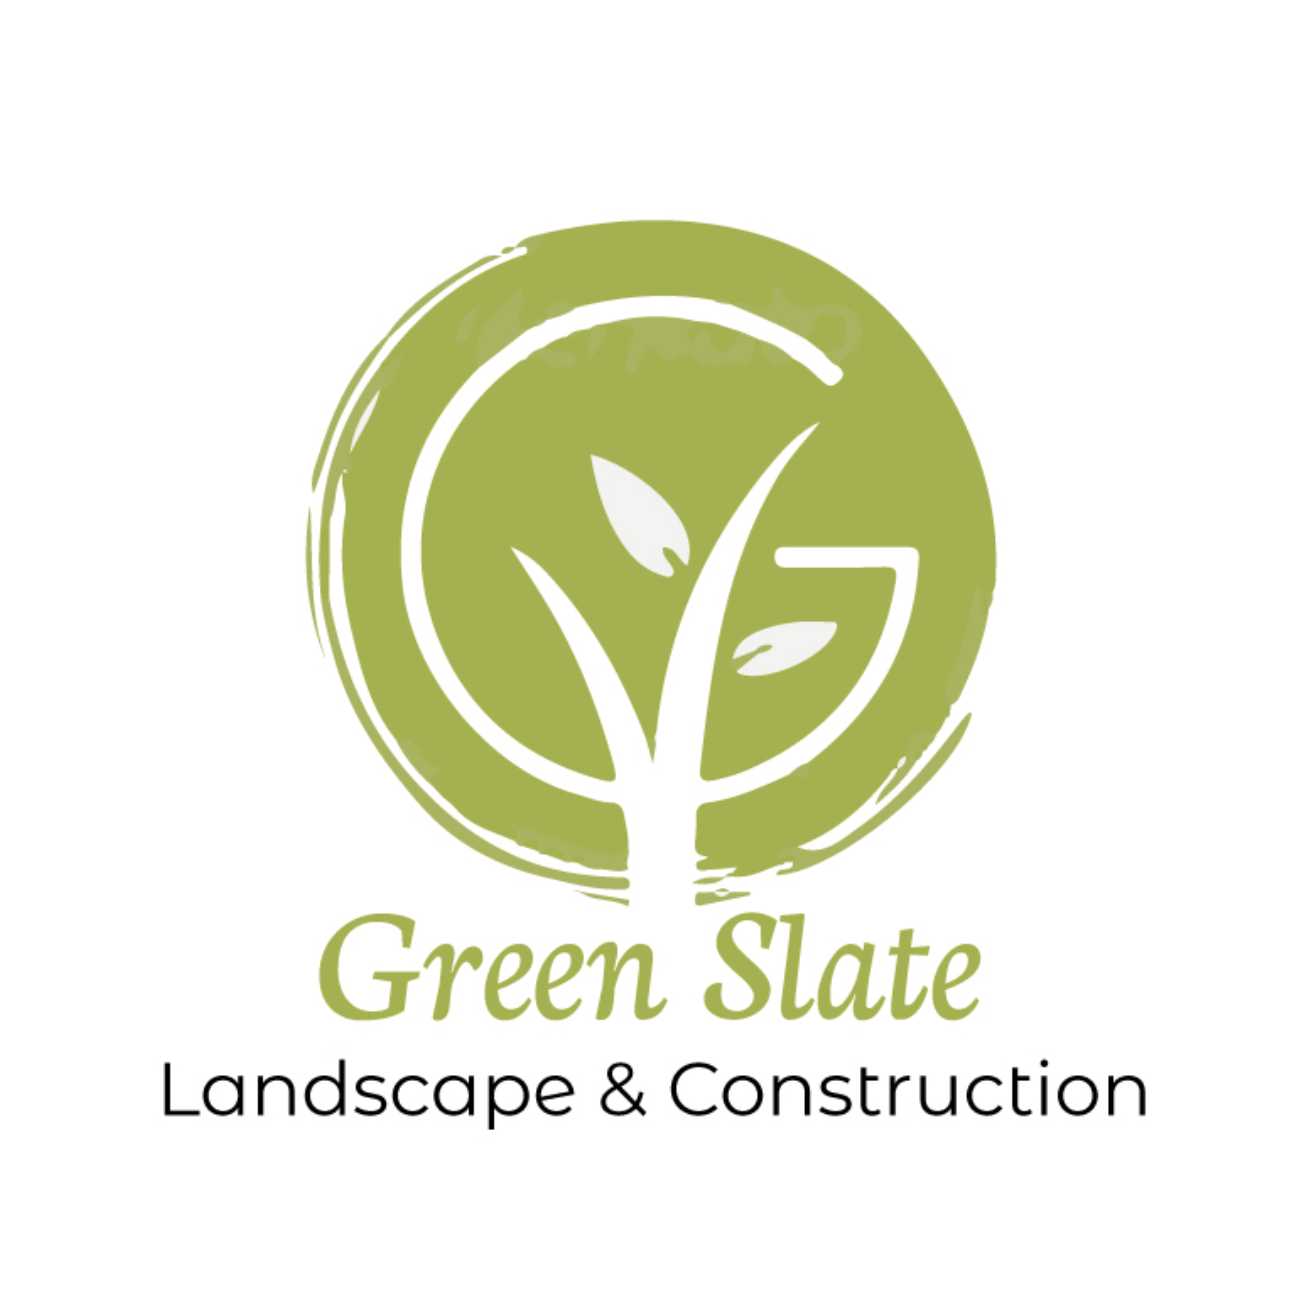 Green Slate Landscape & Construction